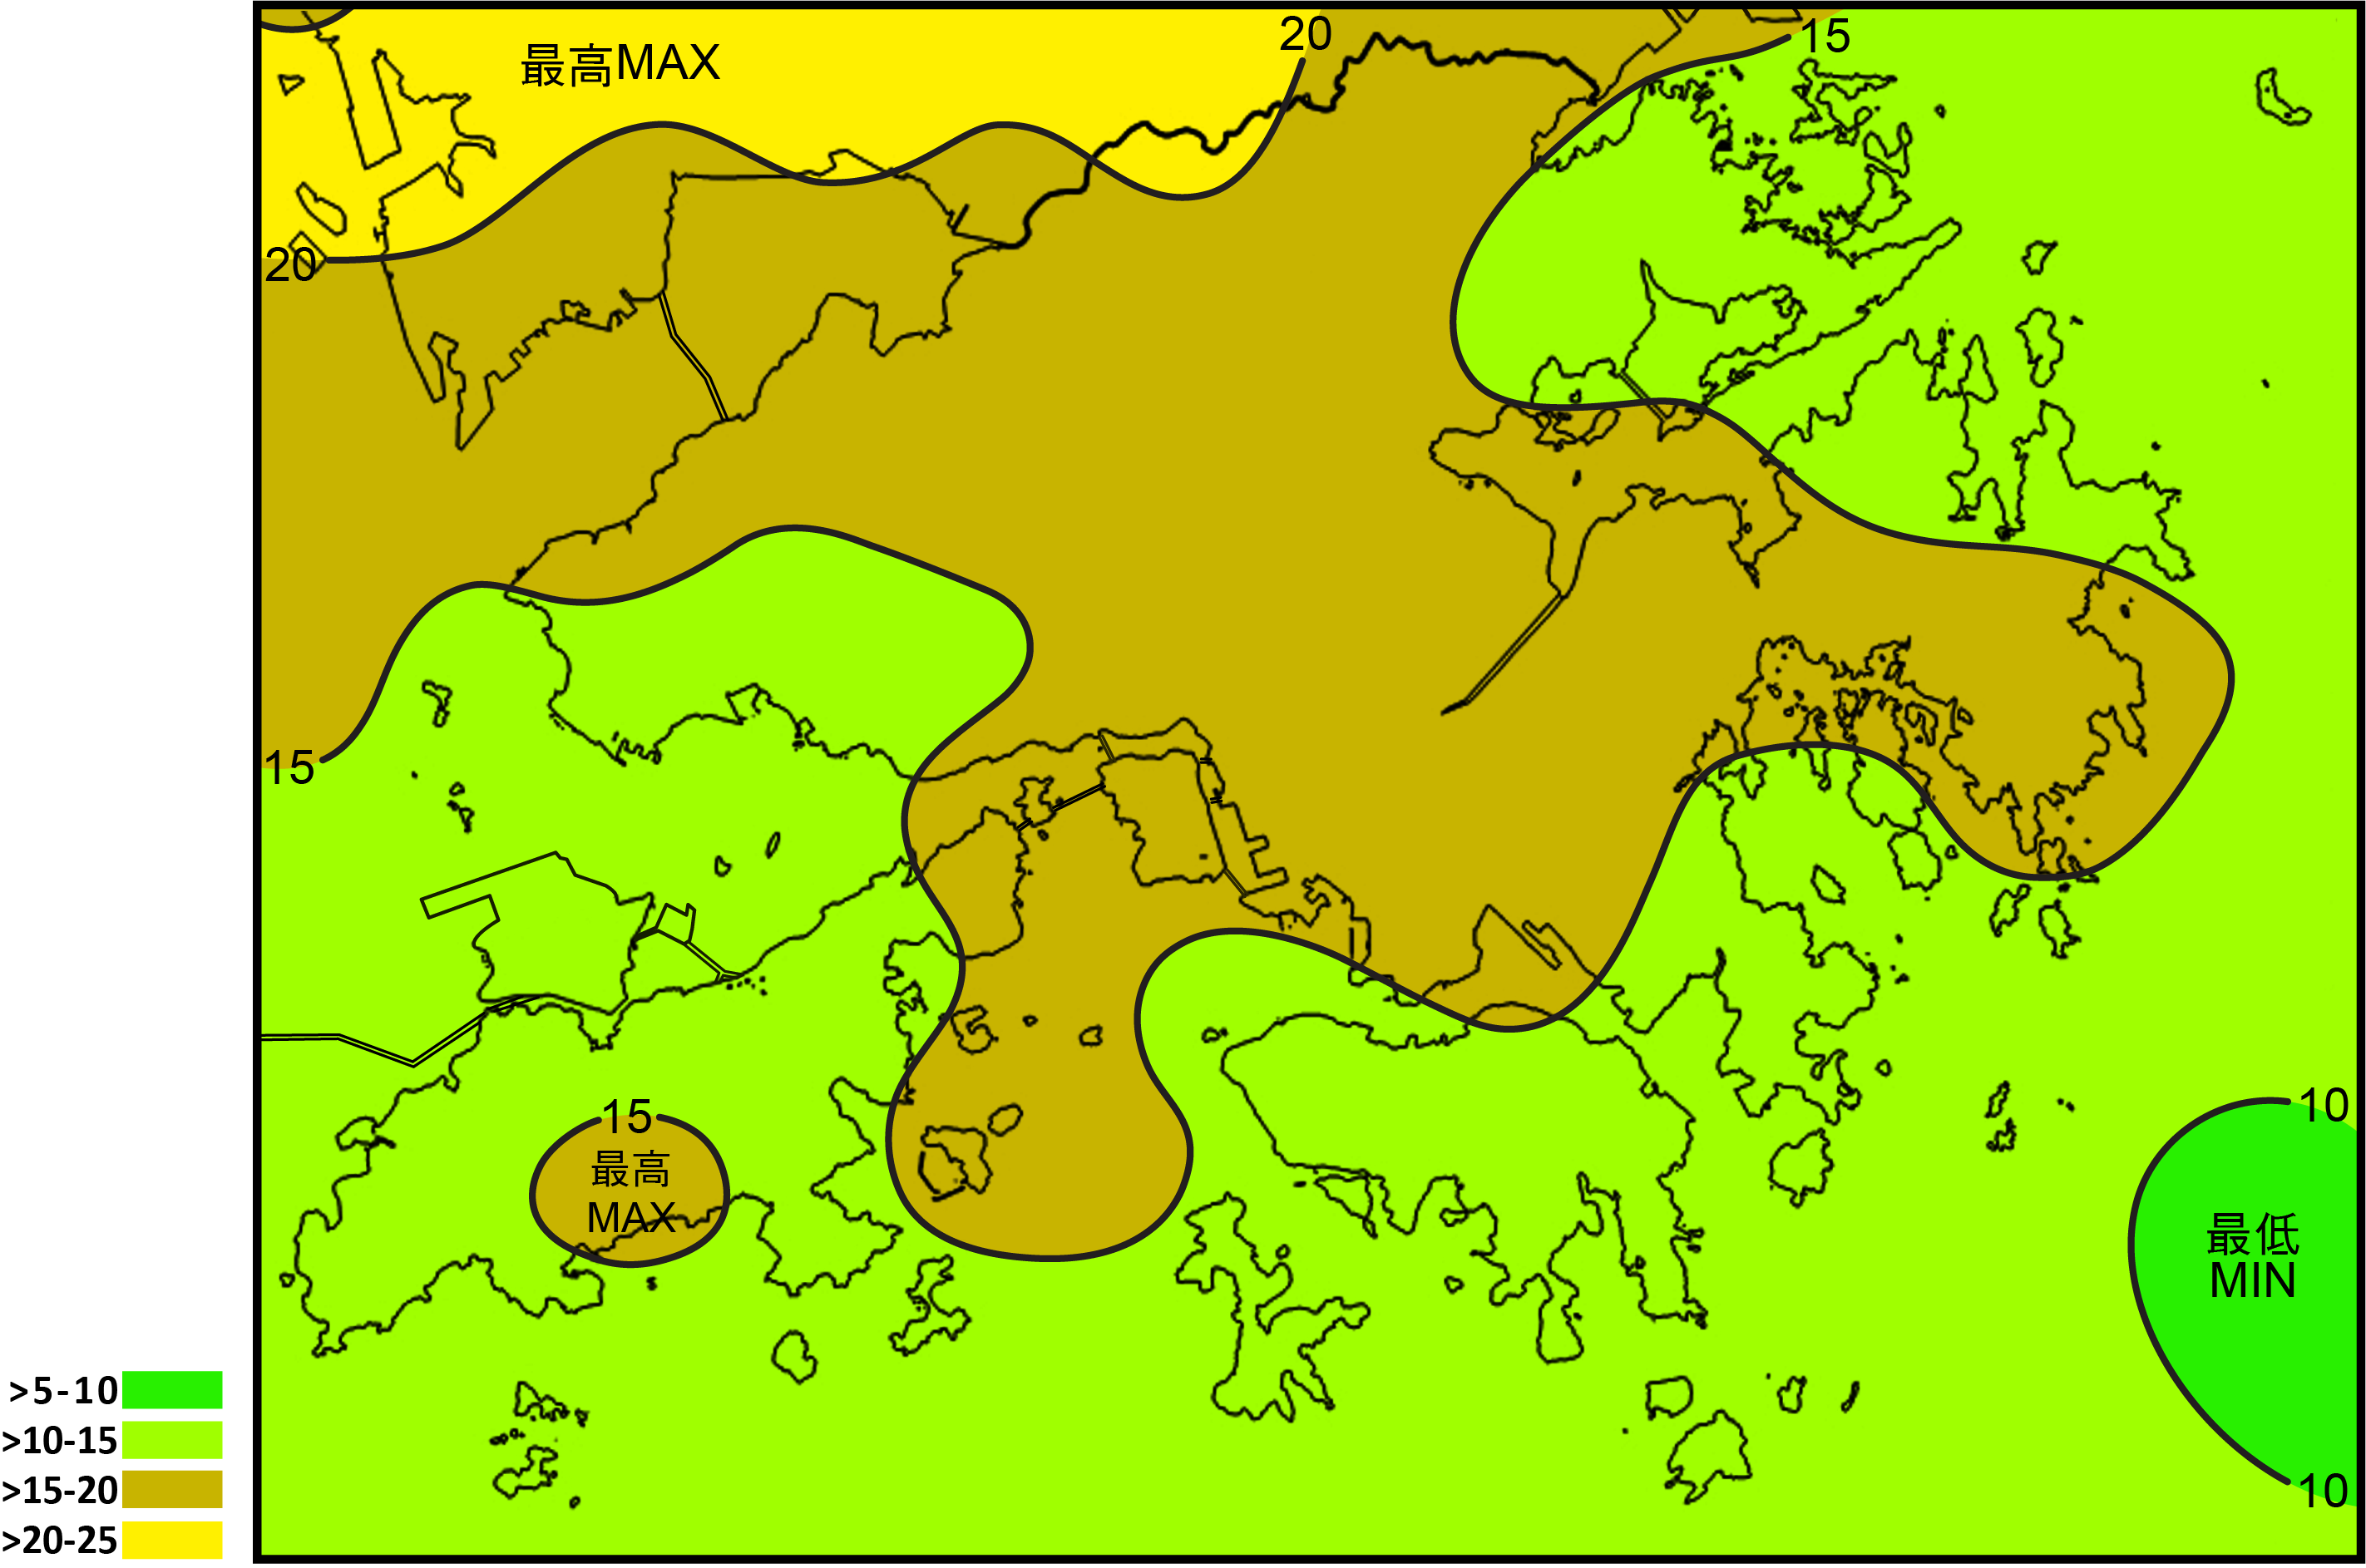 density map 2006-2021